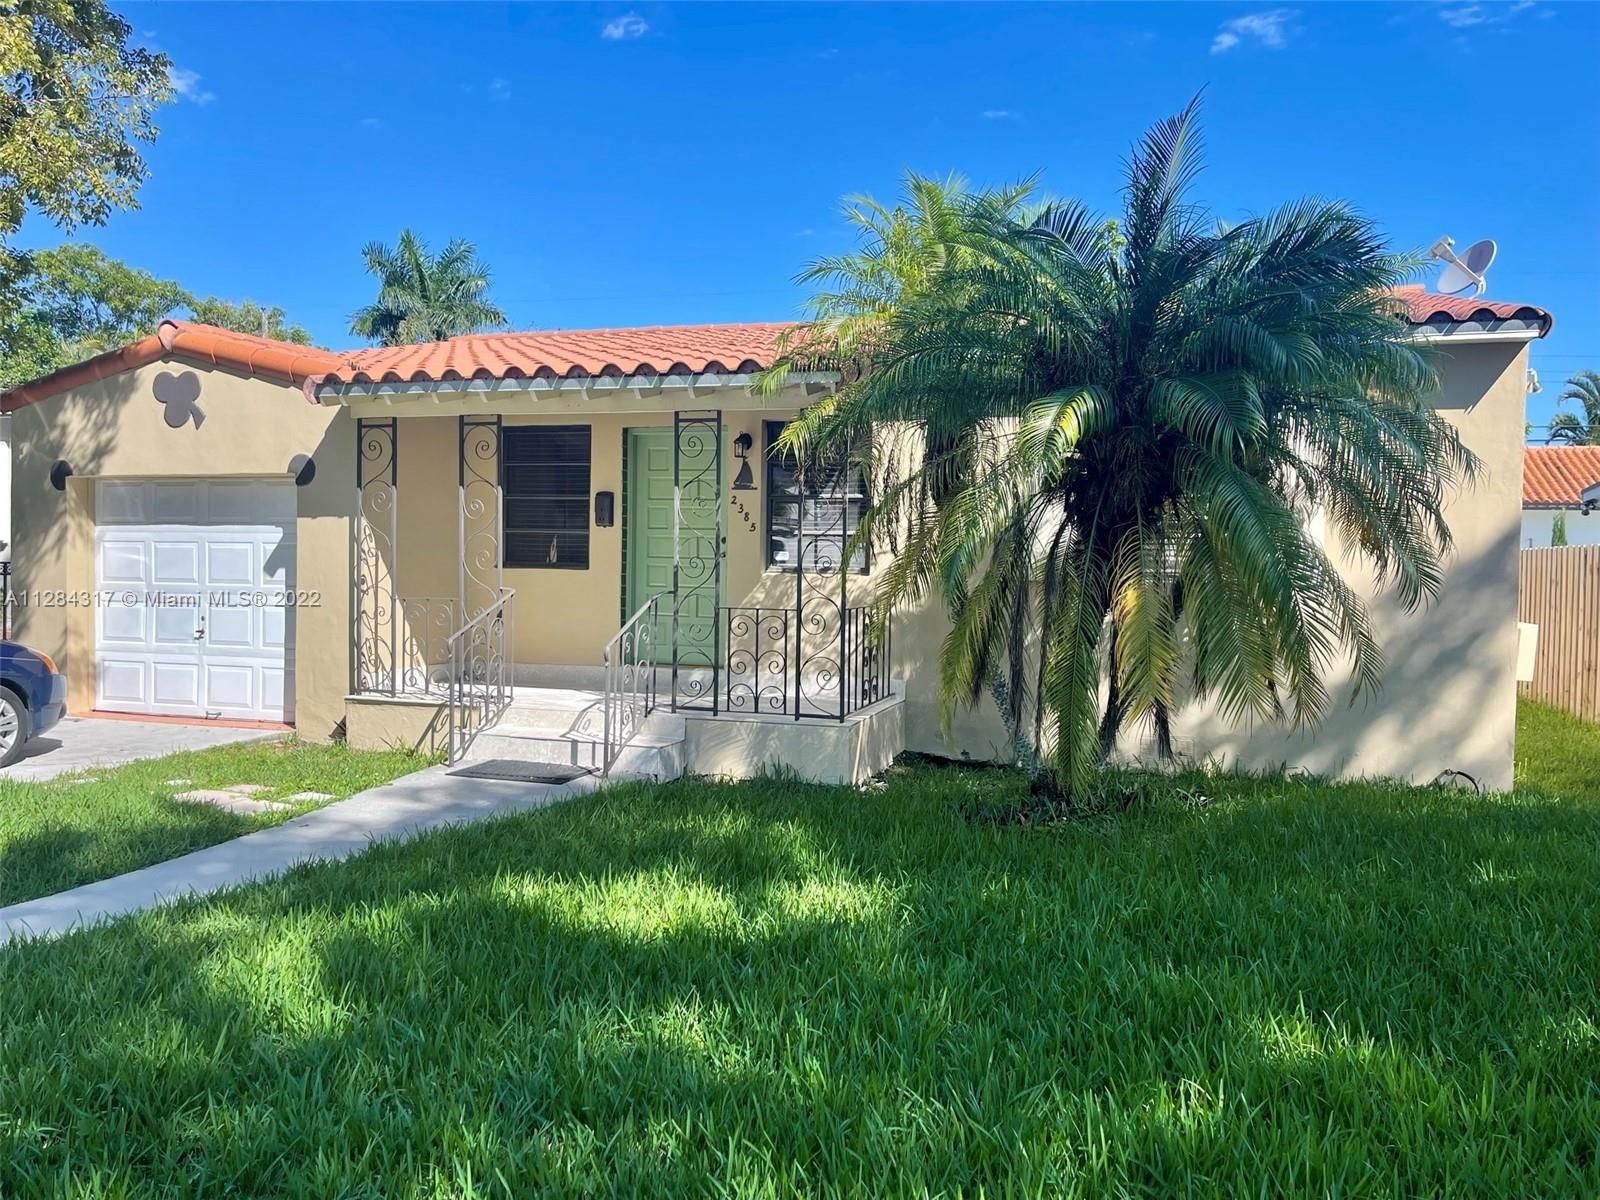 Real estate property located at 2385 25th St, Miami-Dade County, Miami, FL